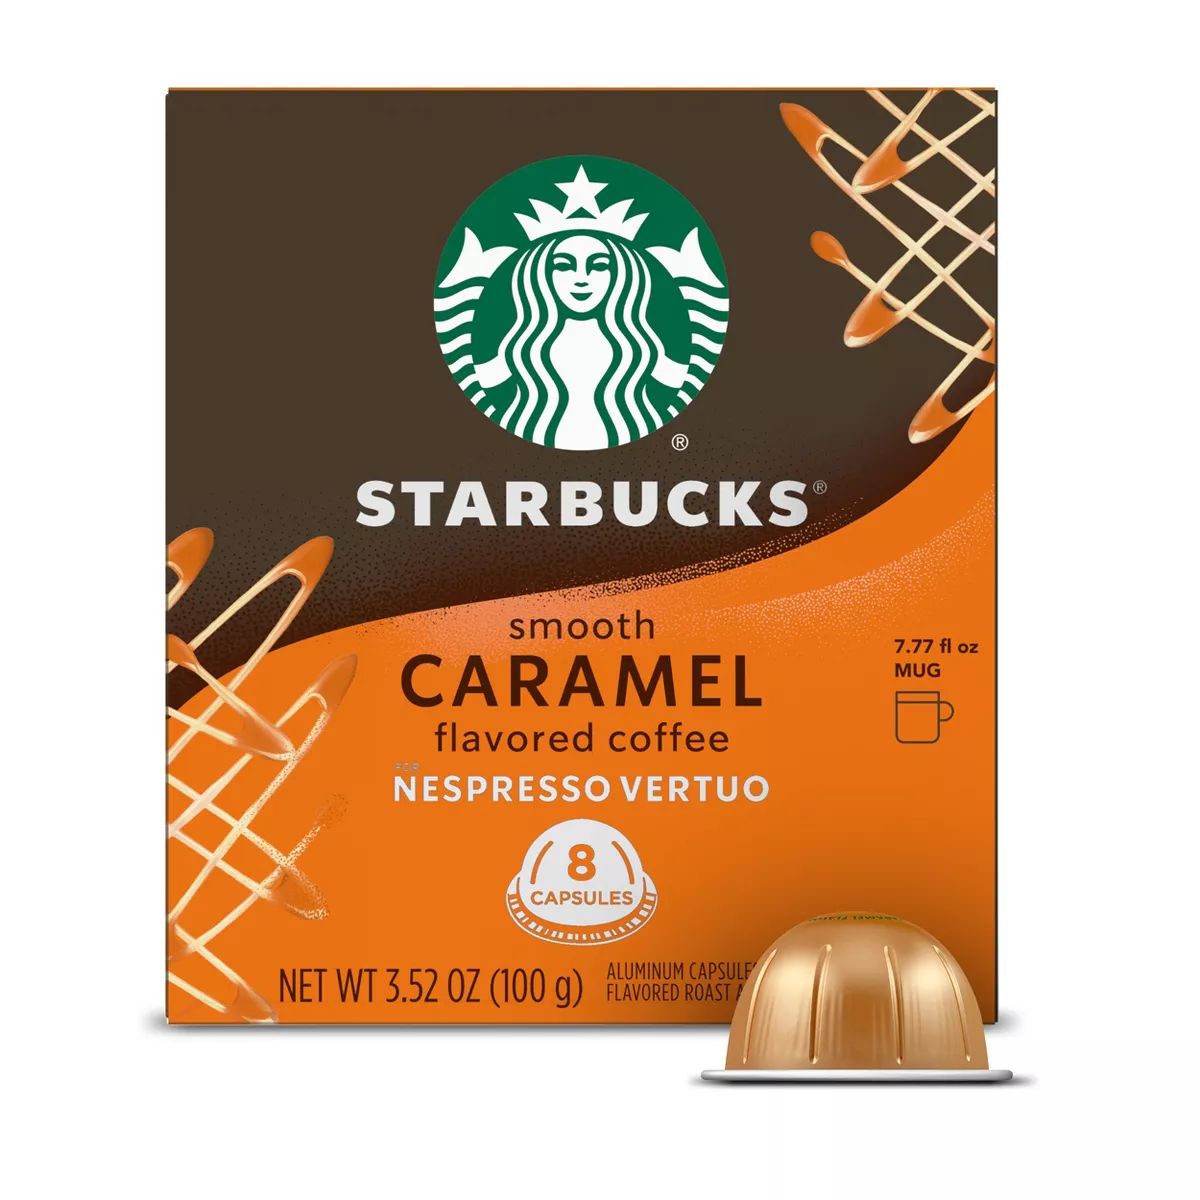 Starbucks by Nespresso VL Smooth Caramel Capsules Light Roast | Target